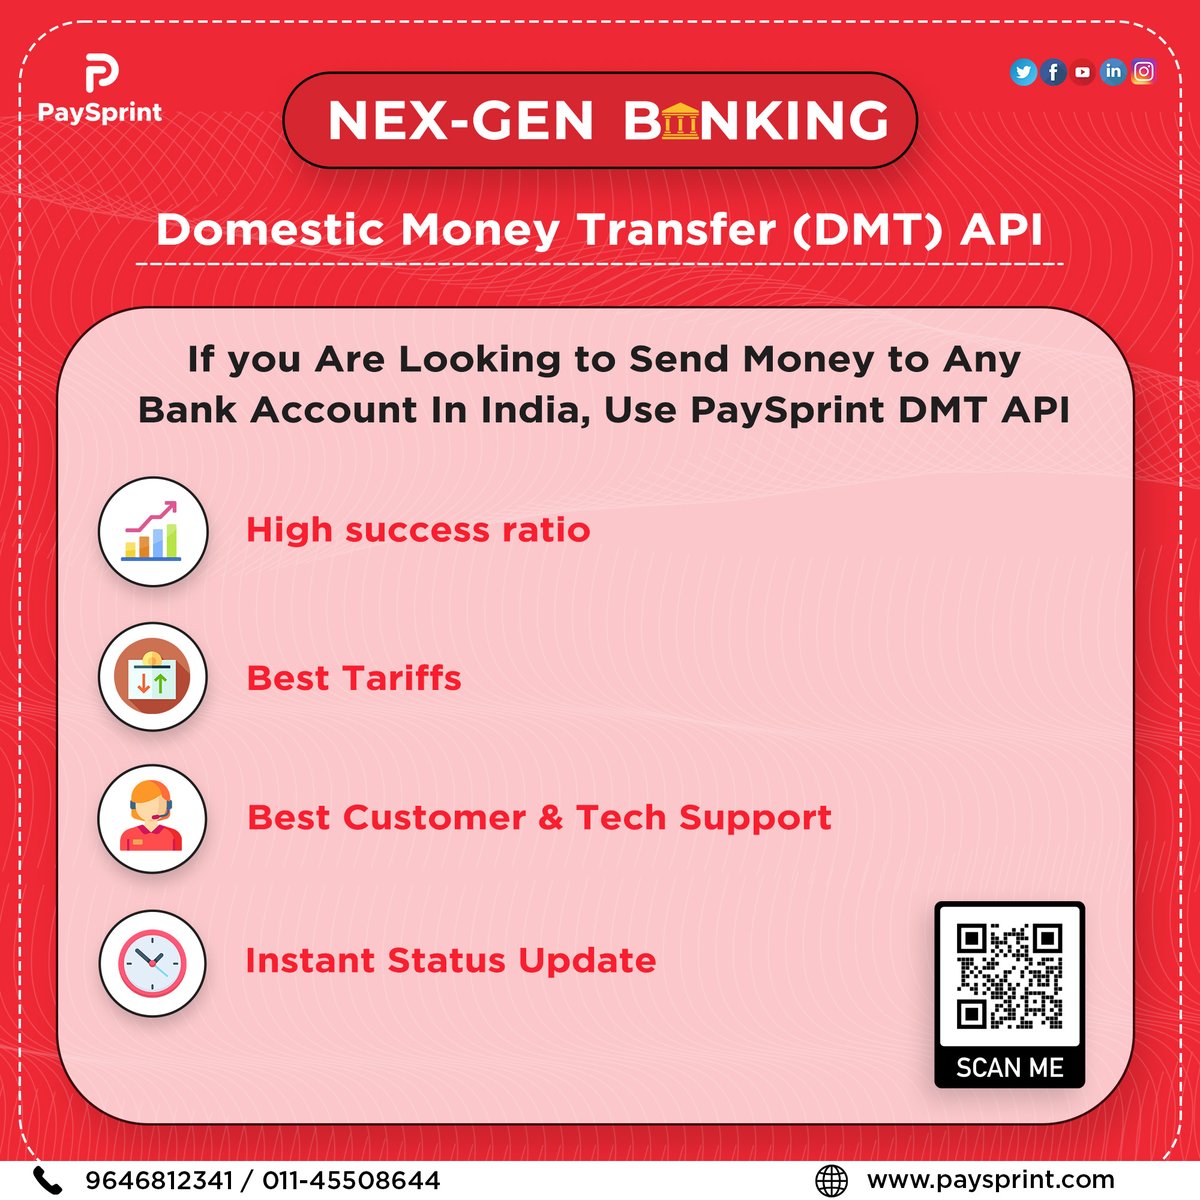 #𝗣𝗮𝘆𝗦𝗽𝗿𝗶𝗻𝘁 - Nex Gen #Banking Offers 𝗗𝗼𝗺𝗲𝘀𝘁𝗶𝗰 𝗠𝗼𝗻𝗲𝘆 𝗧𝗿𝗮𝗻𝘀𝗳𝗲𝗿 #API
Why wait? Become our API Partner today!
🌐paysprint.in
📞9646812341

#nexgenbanking #fintech #moneytransfer #DMTAPI #moneytransferapi #moneytransferservice